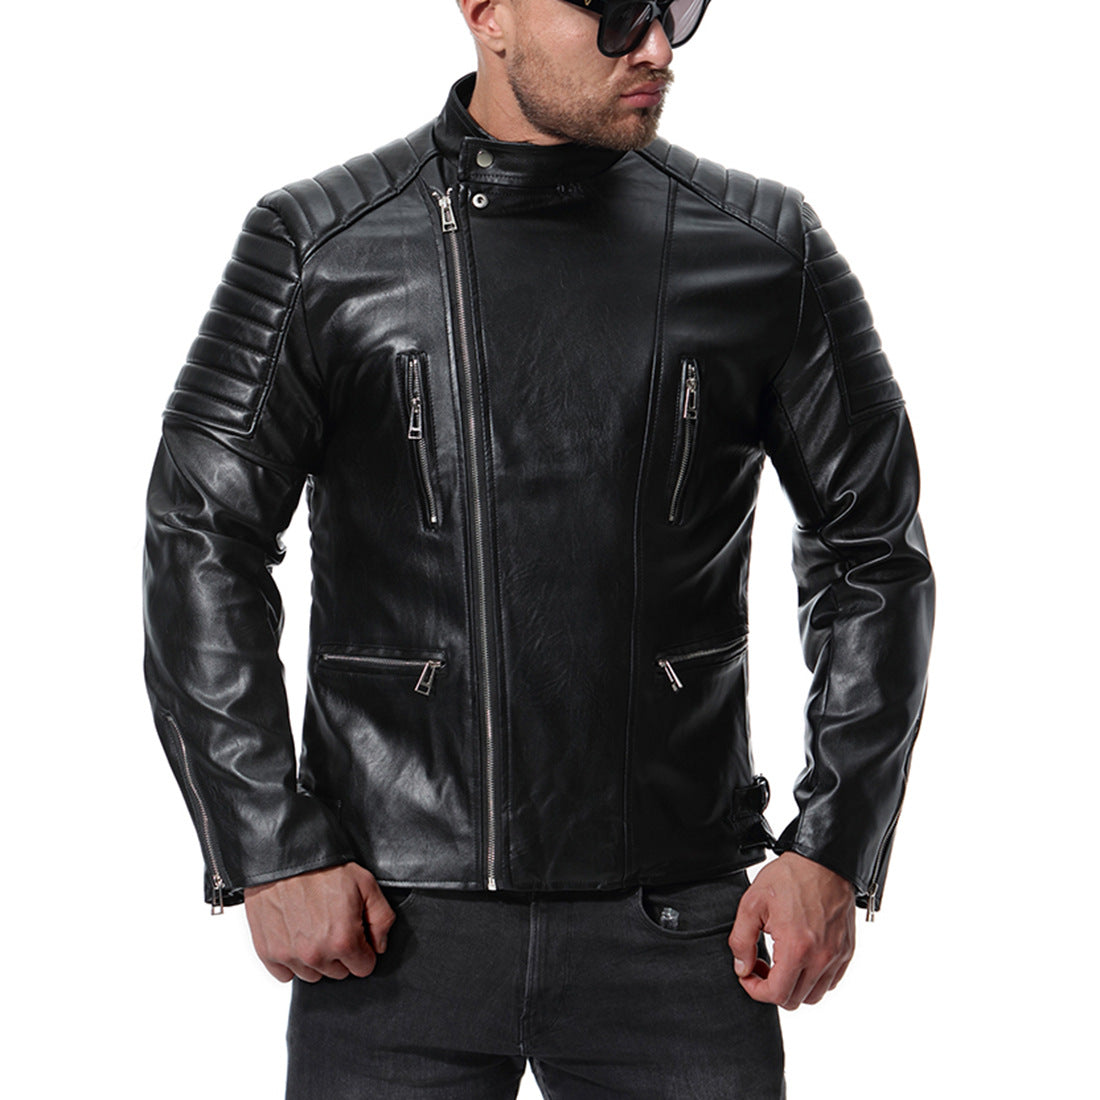 IRON JIA'S Leather Motorcycle Jacket Waterproof Rainproof Urban Casual Moto Motocross Clothes Mens Motorbike Riding Jacket